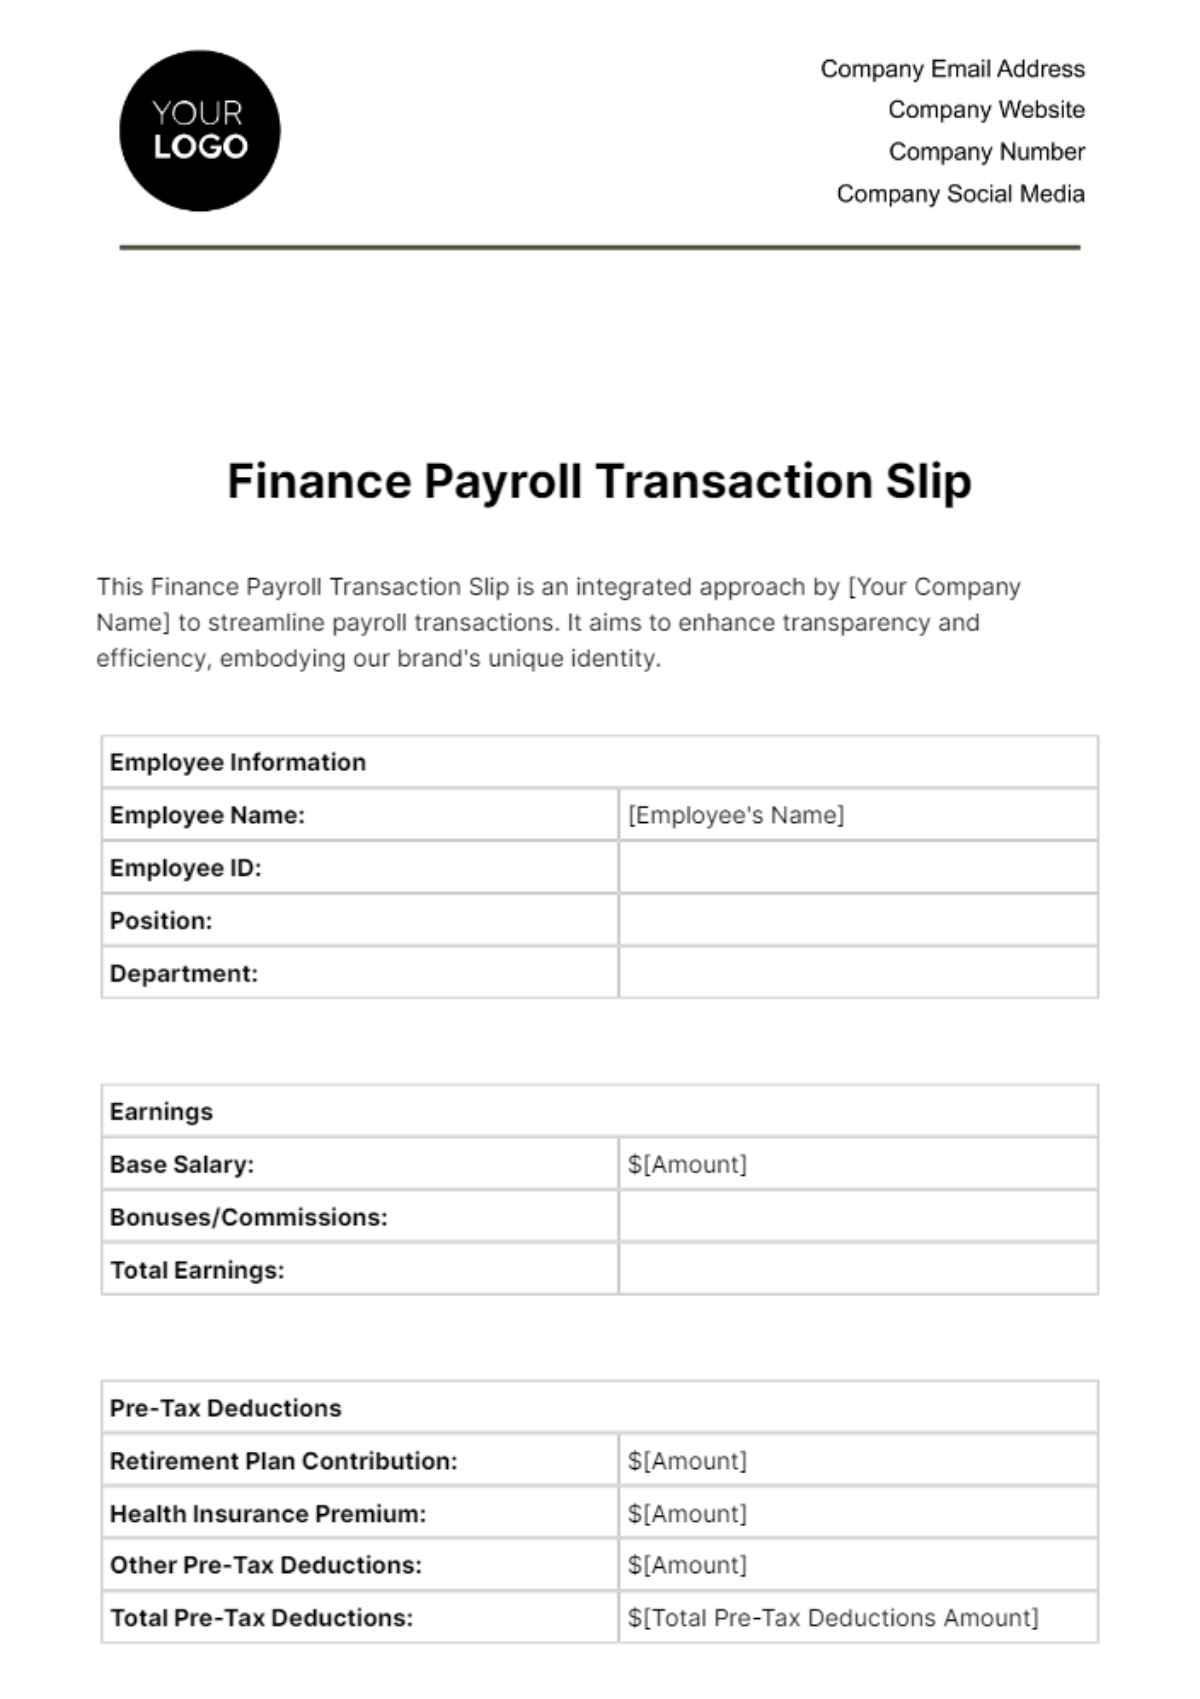 Free Finance Payroll Transaction Slip Template